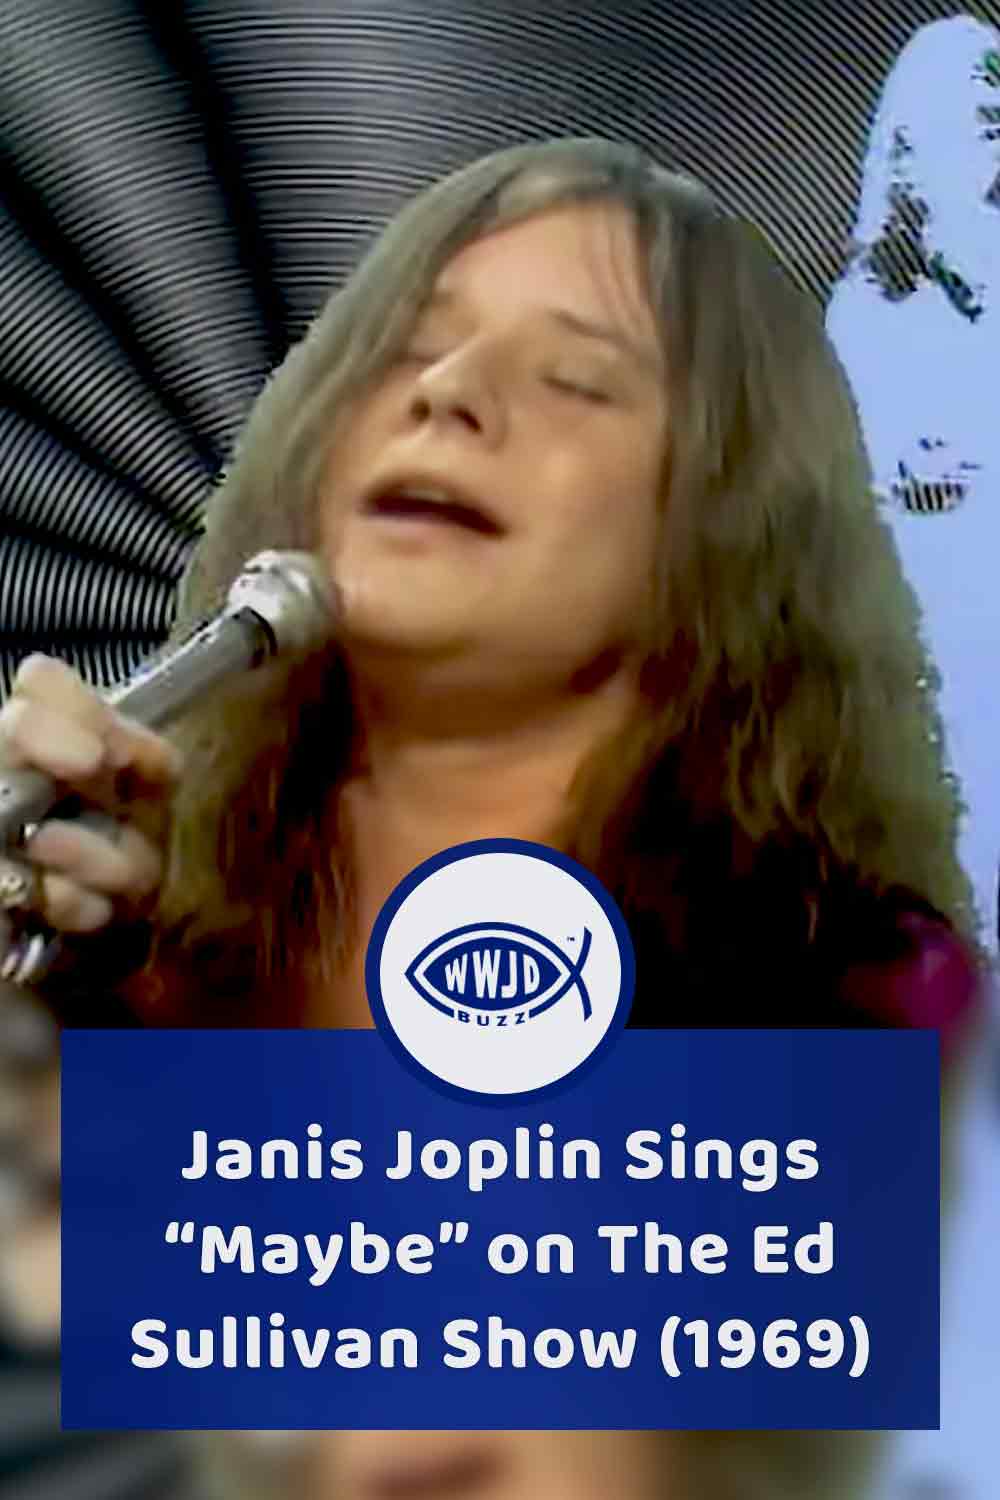 Janis Joplin Sings “Maybe” on The Ed Sullivan Show (1969)